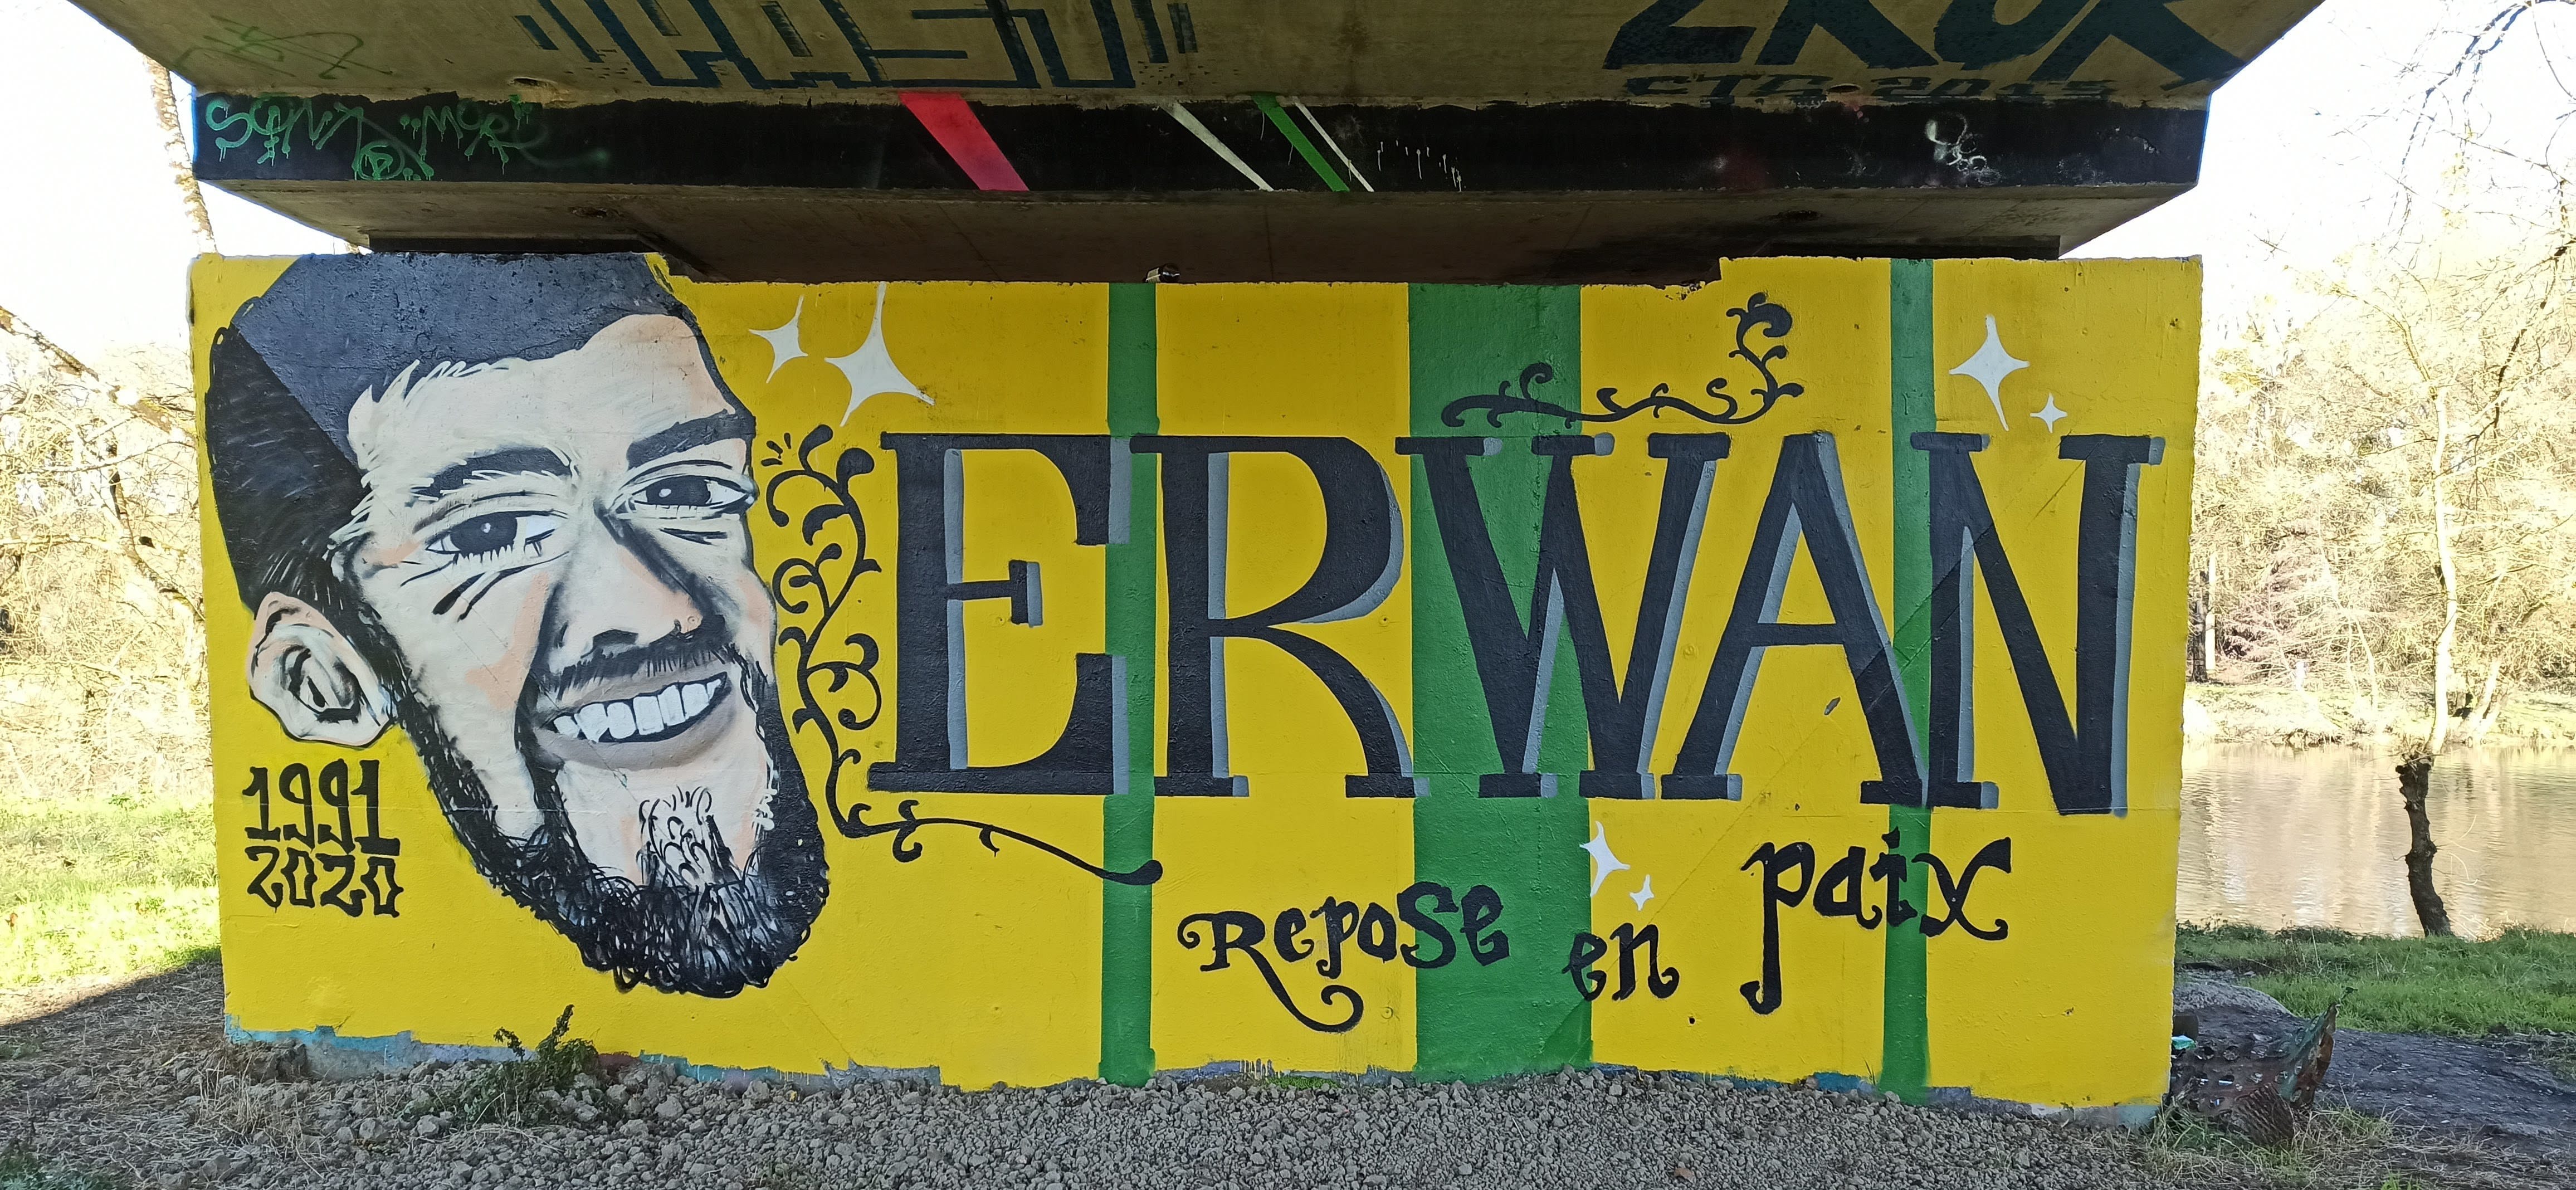 Graffiti 4701 Erwan, repose en paix (1991-2020) captured by Rabot in Rezé France